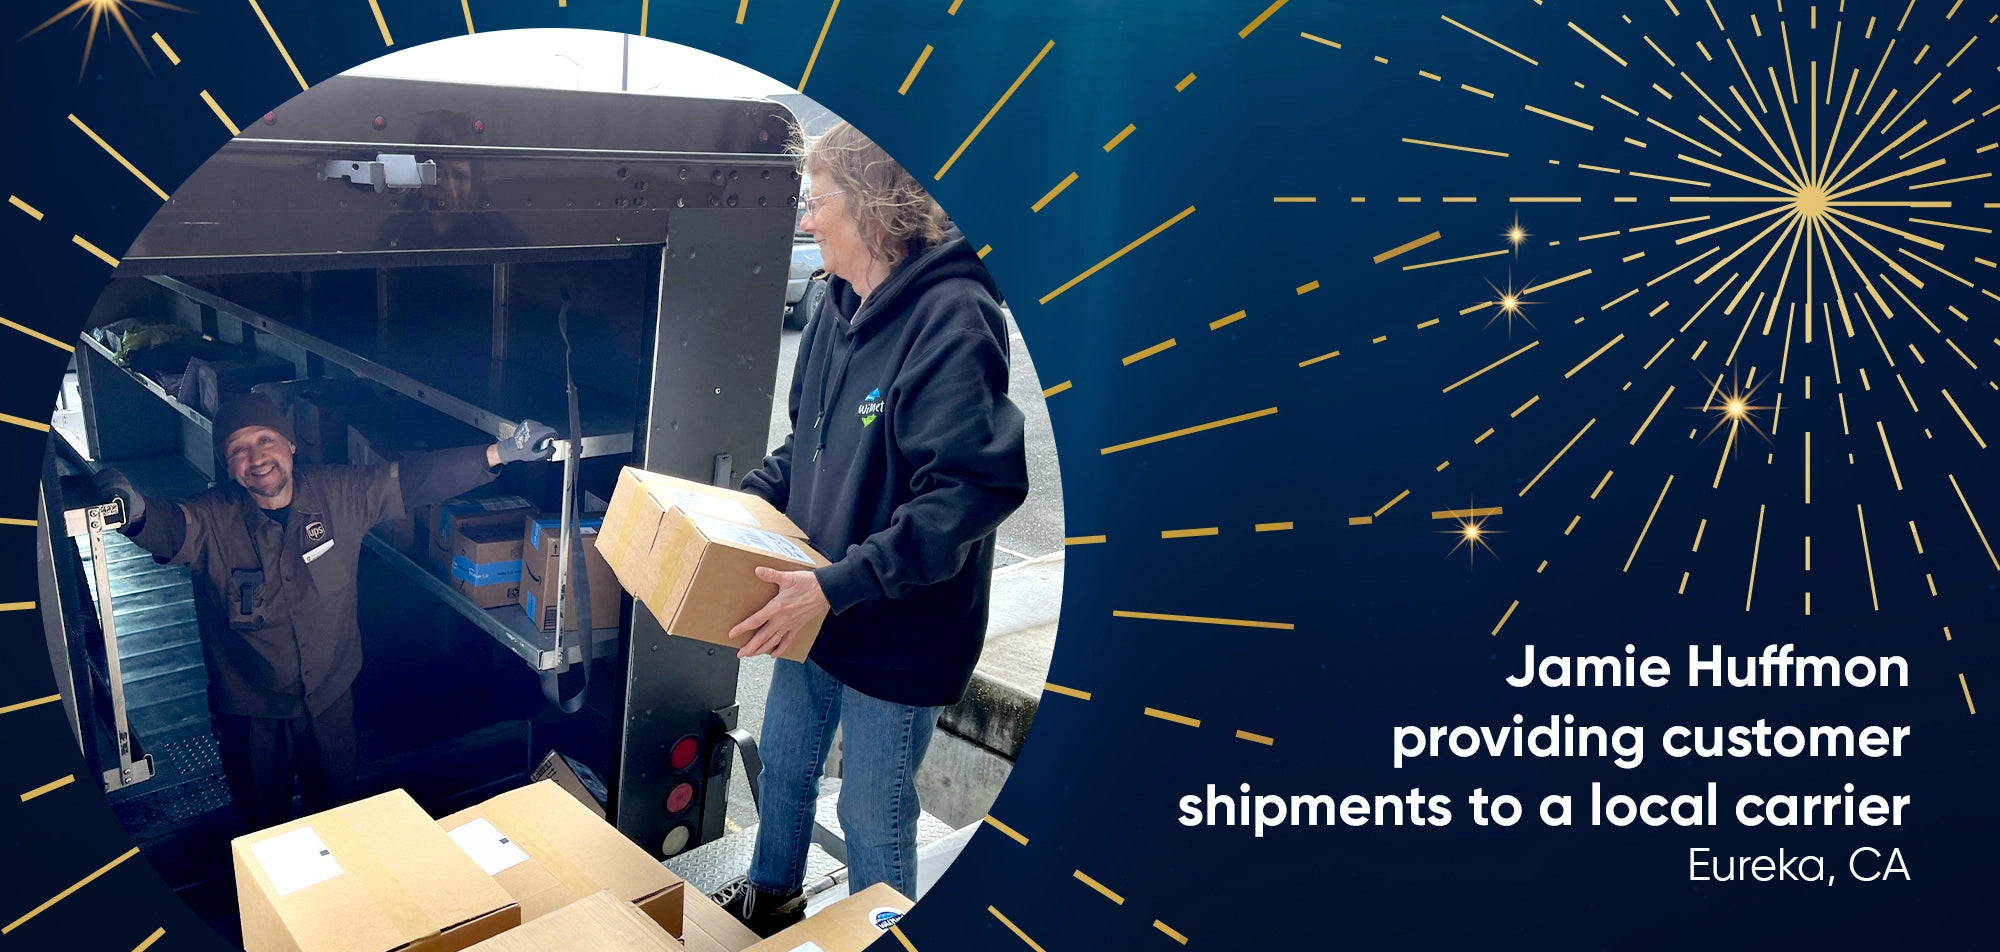 Jamie Huffmon providing customer shipments to a local carrier, Eureka, CA